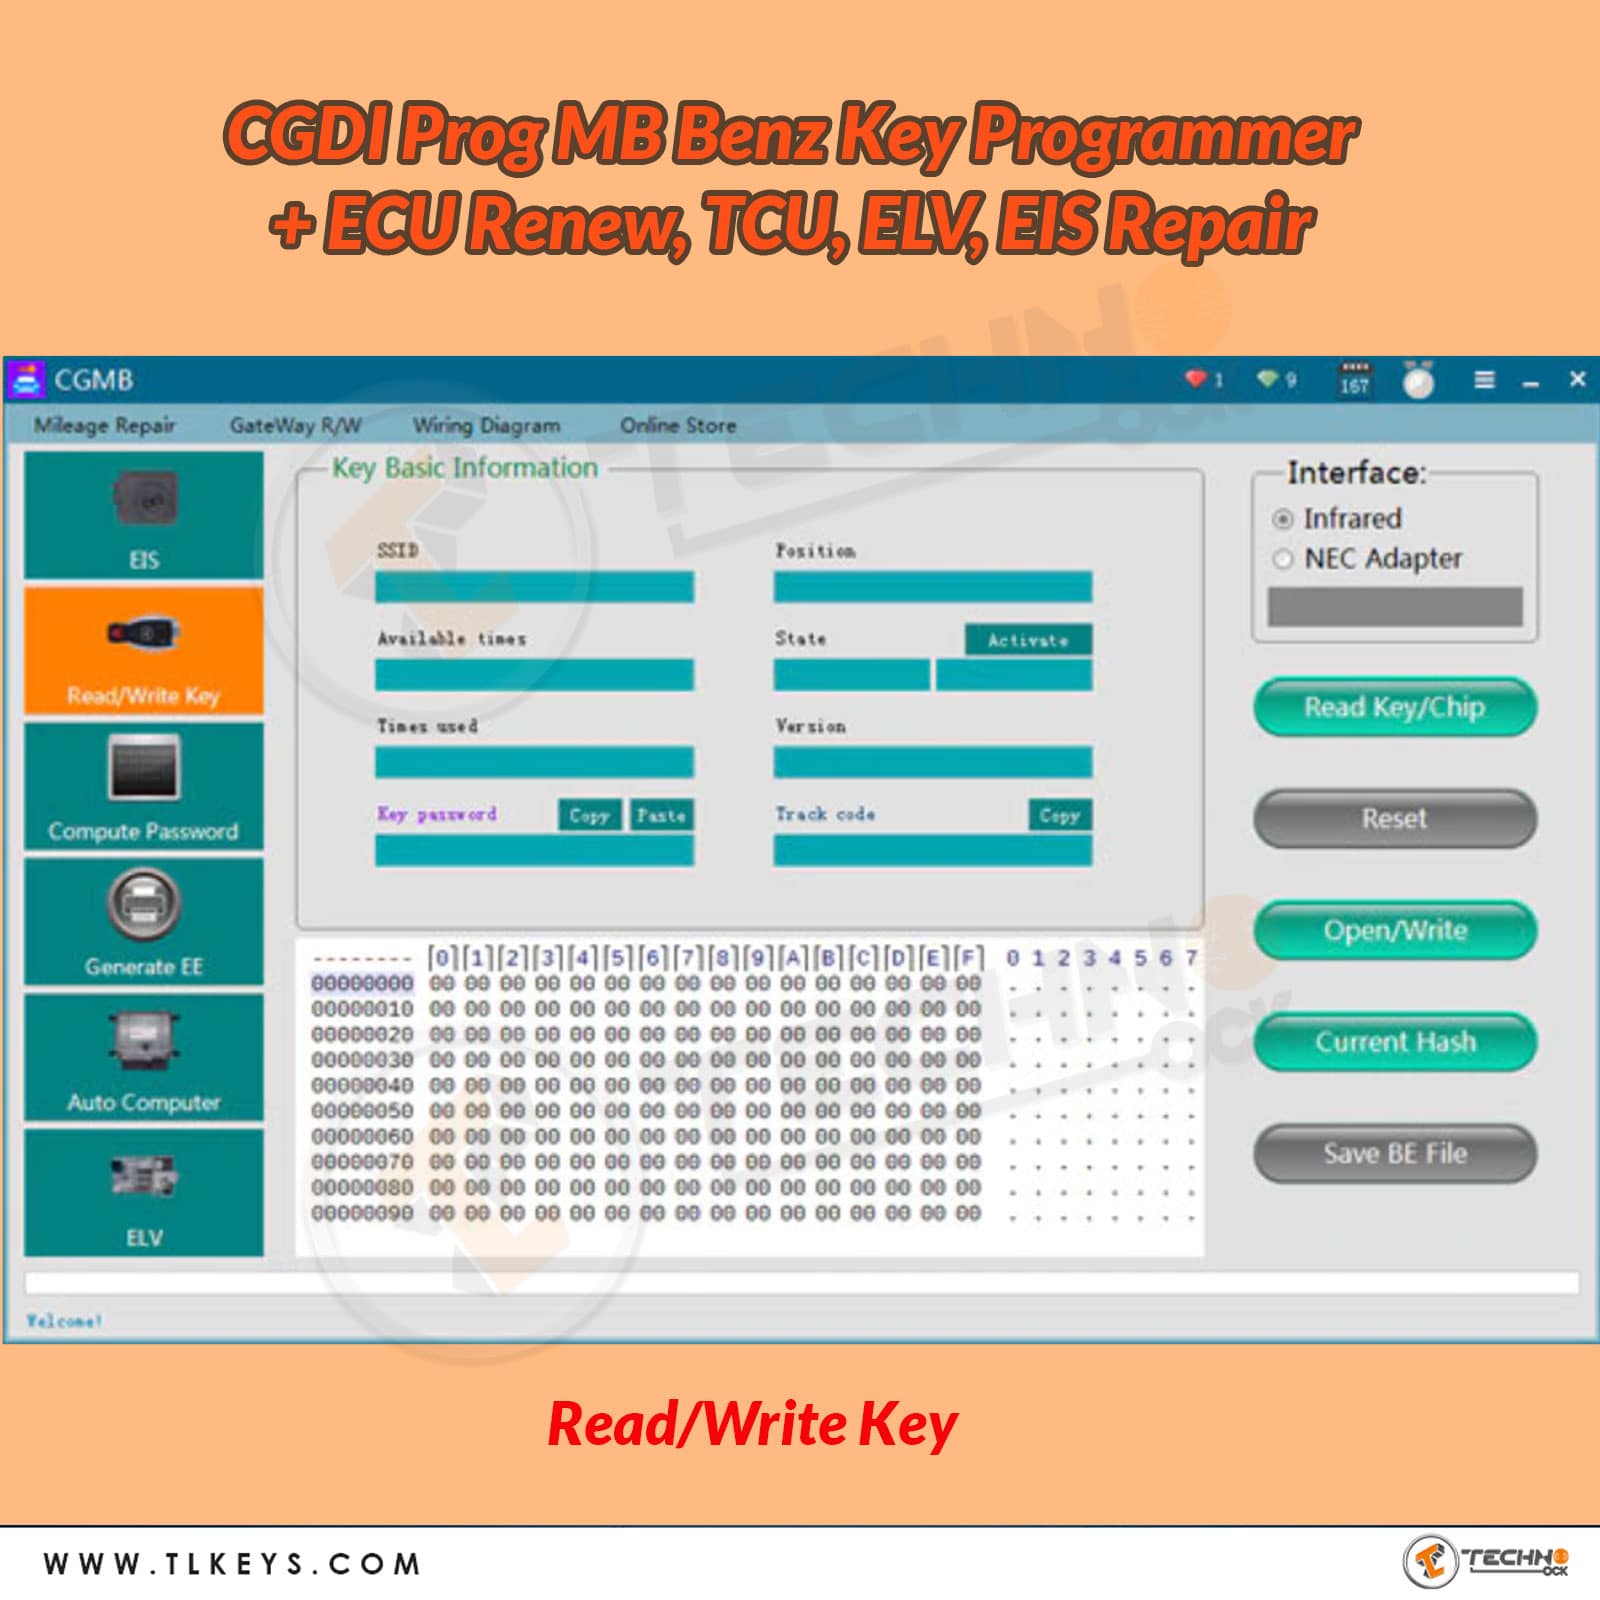 CGDI Prog MB GDI Prog MB Read / Write Key